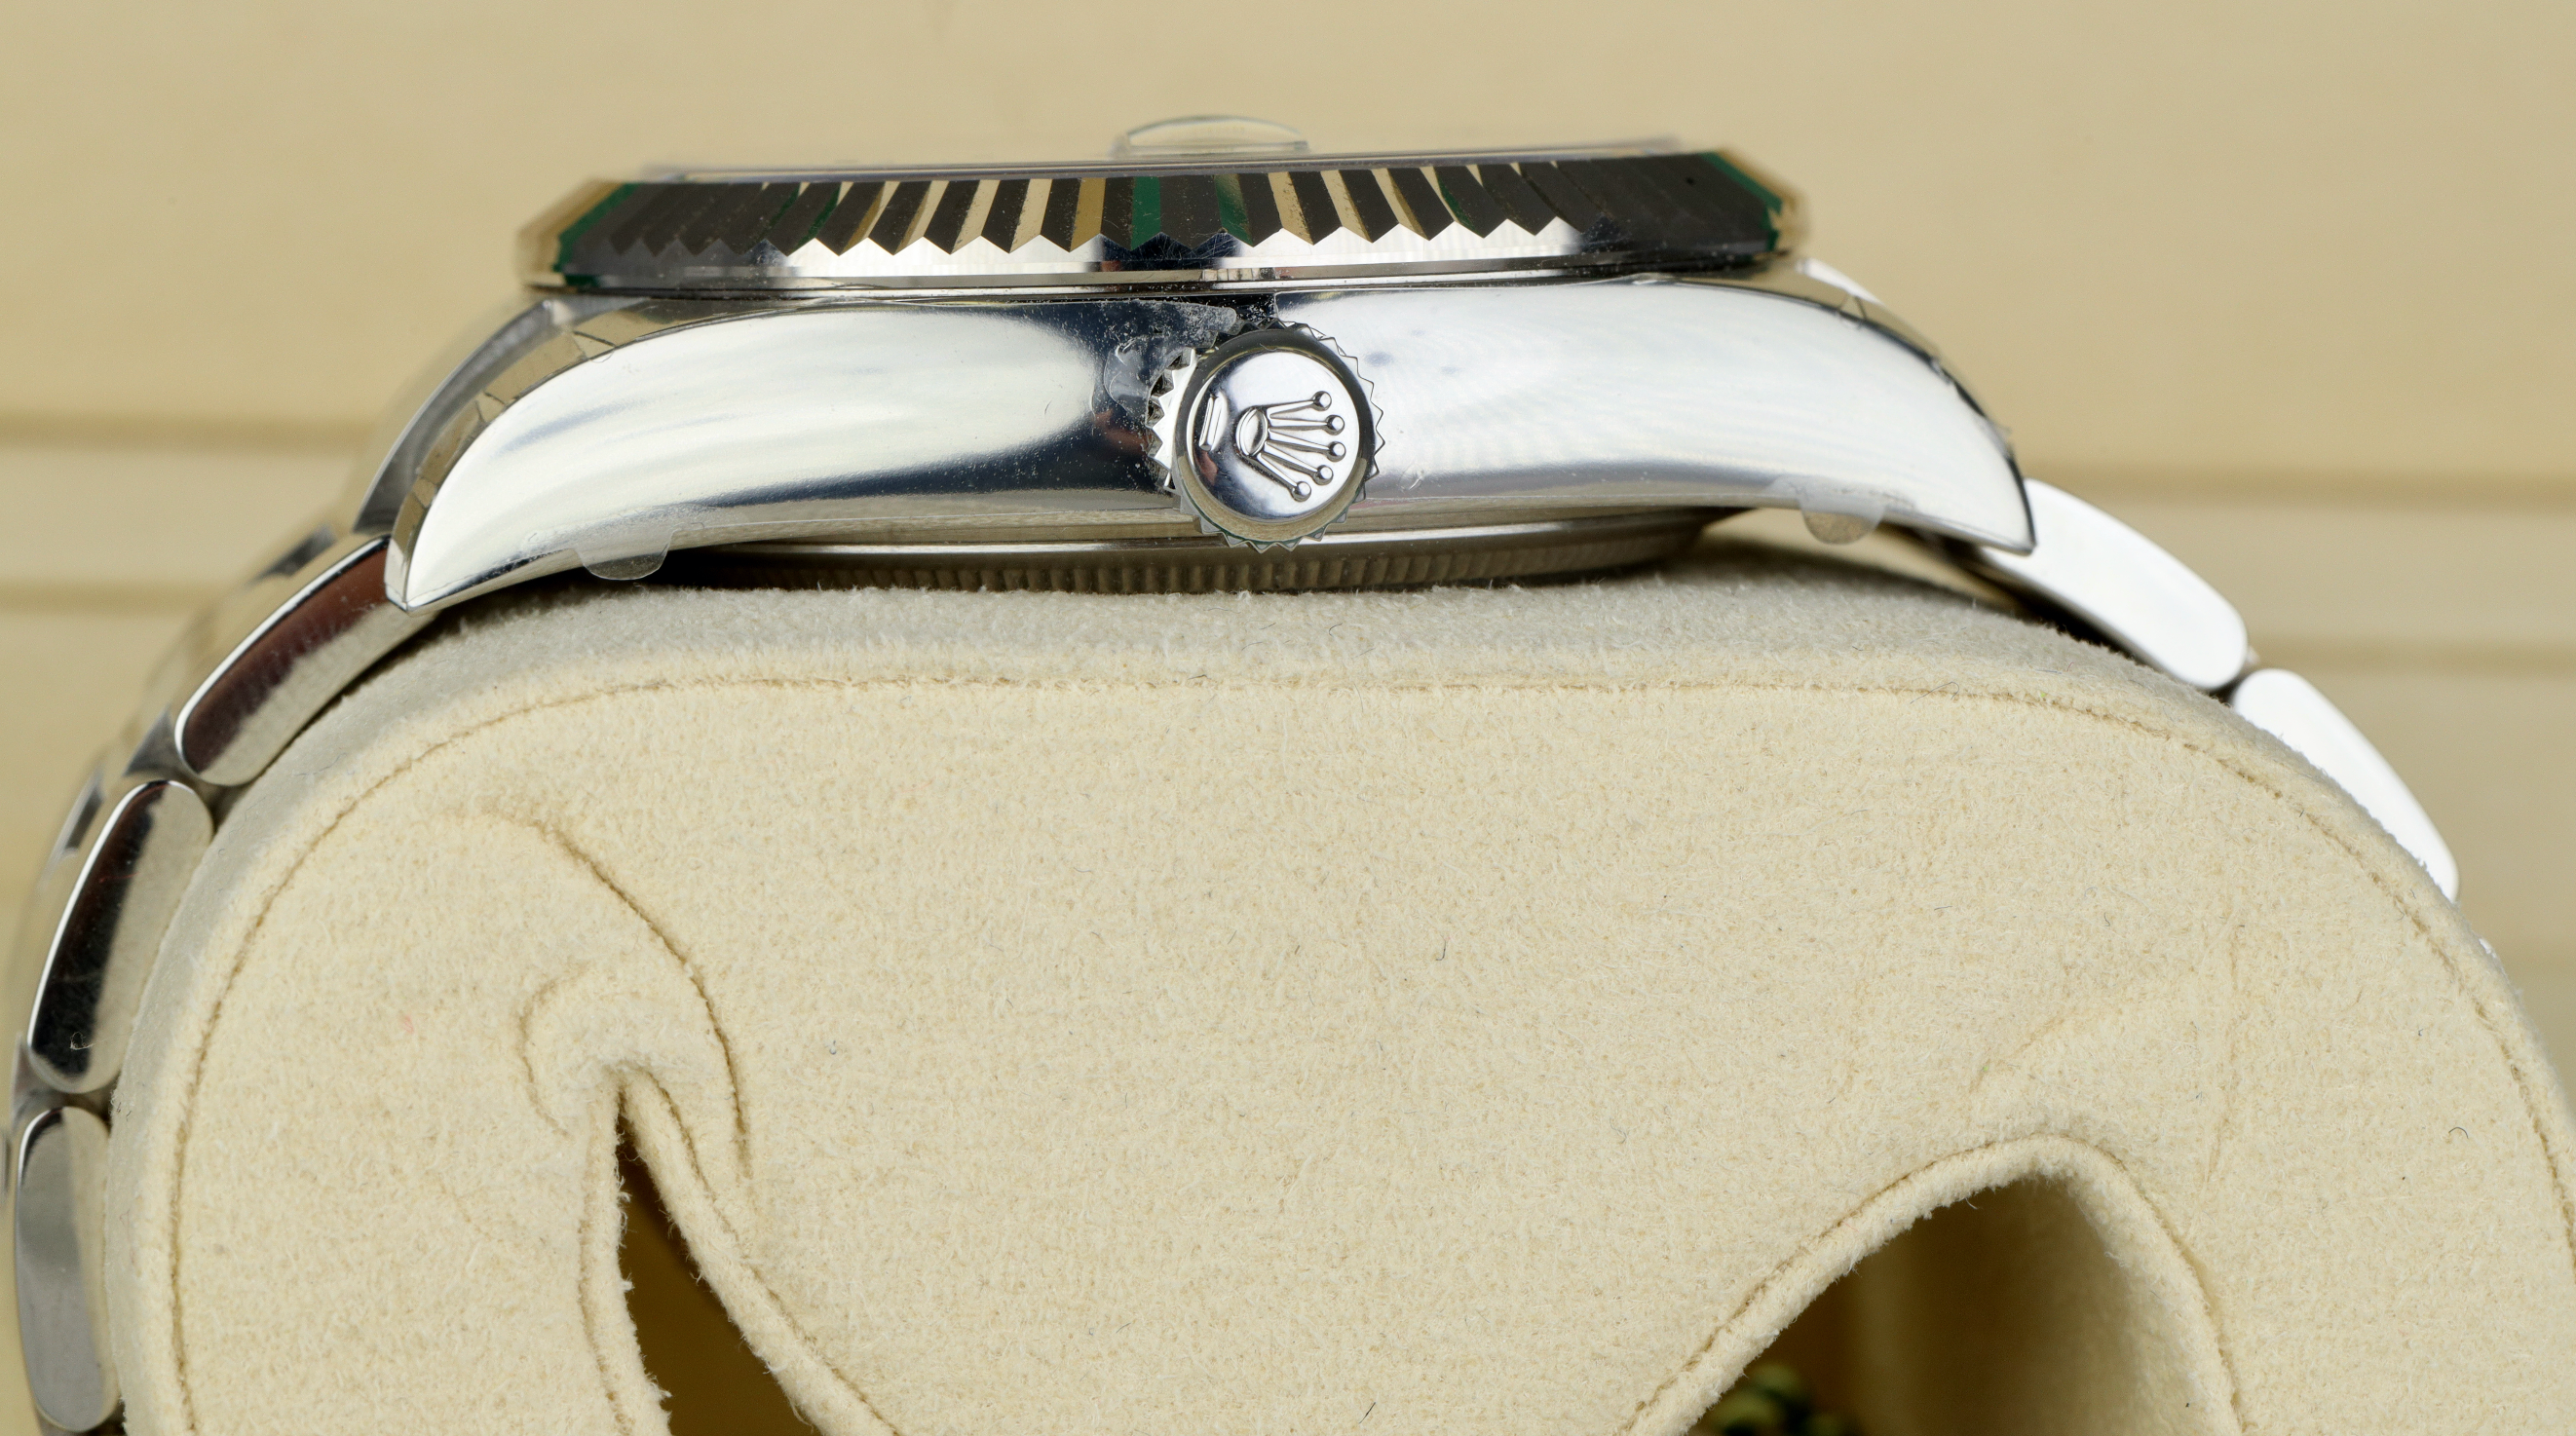 BRAND NEW 2020 Rolex Sky-Dweller Stainless 18K White Gold 326934 42mm Watch